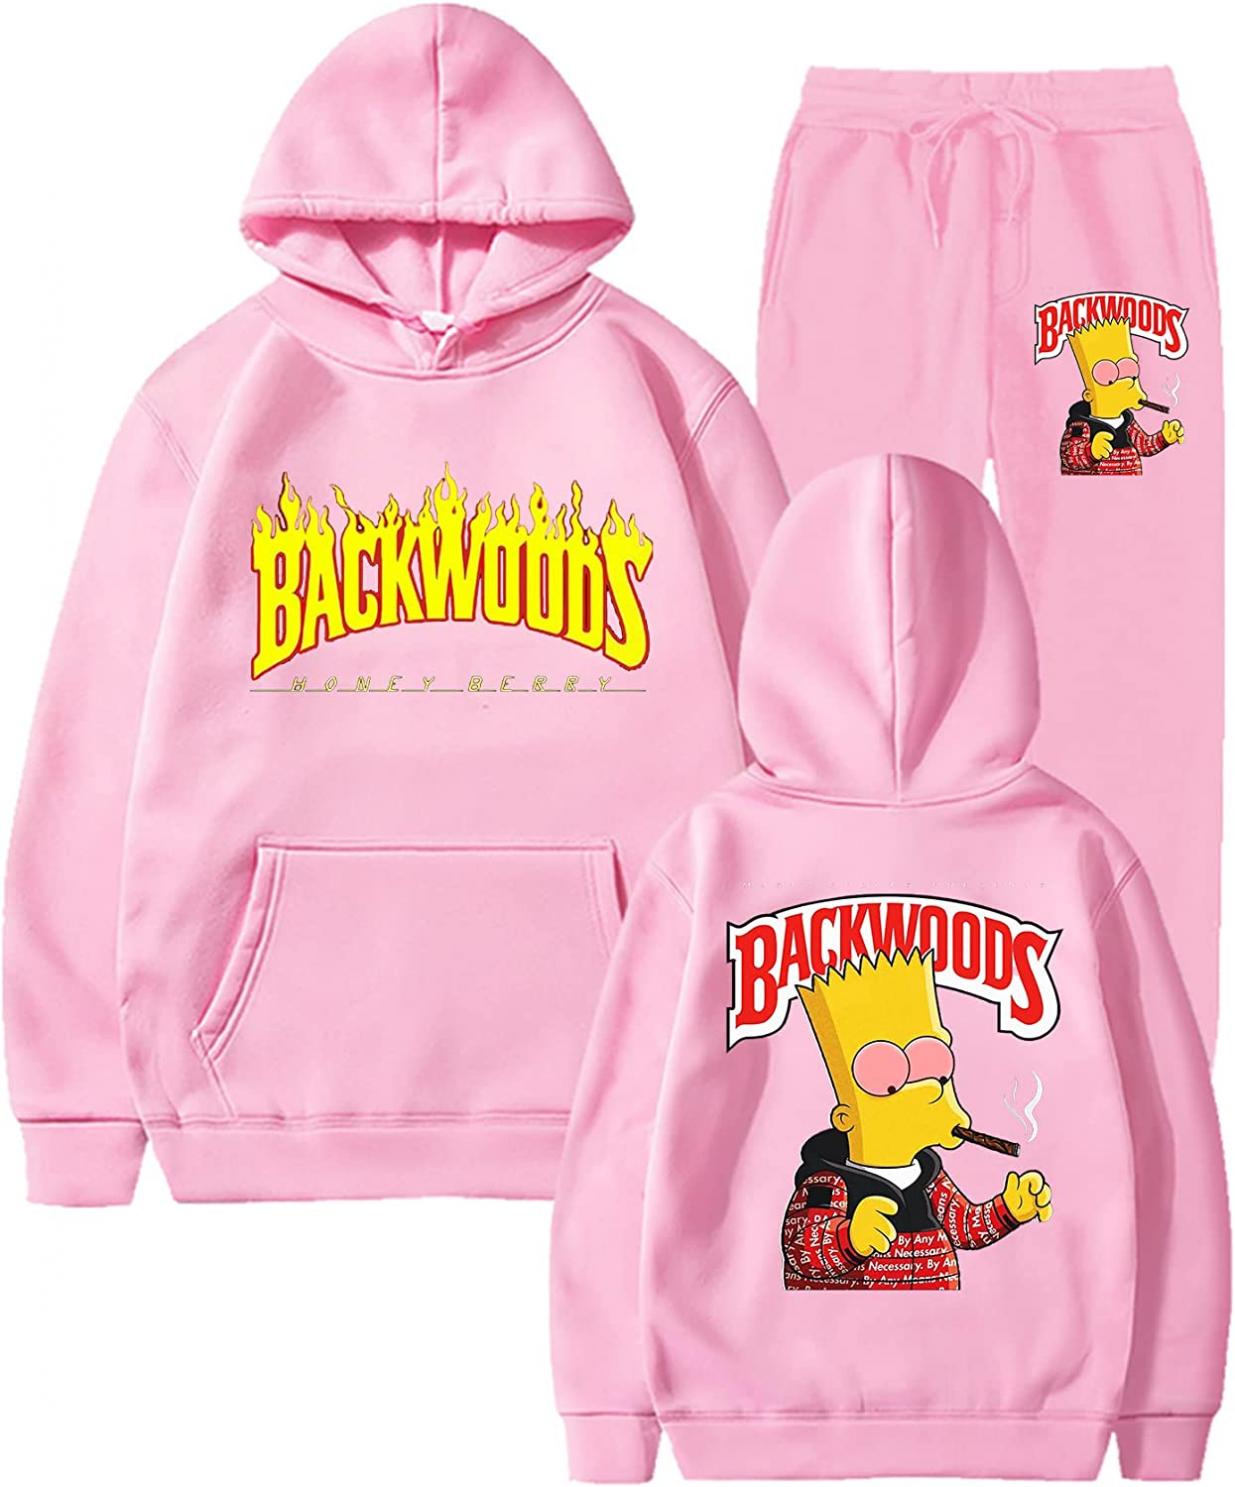 Backwoods Hoodie and Sweatpants Set Pullover Backwoods Hoodie and Sweats Pants Sweatshirt Tracksuit for Men Women Kids